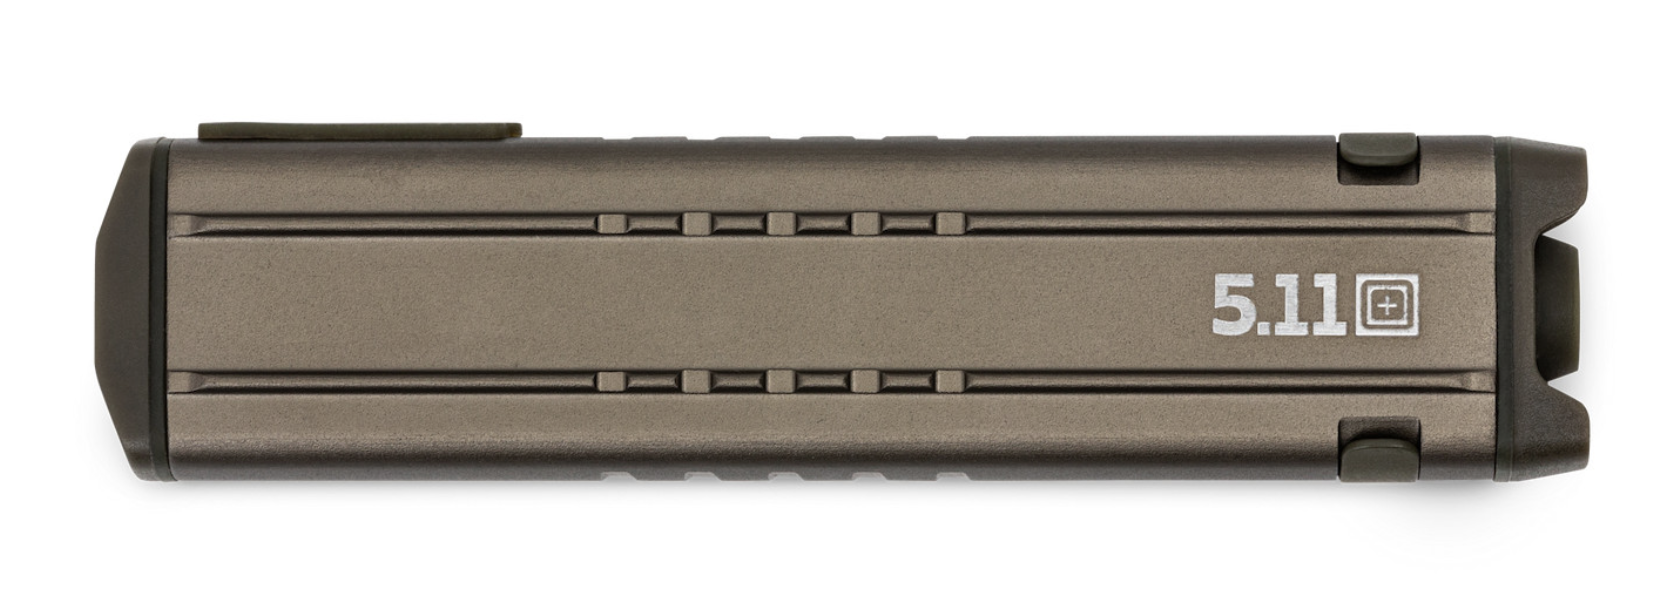 5.11 - Deploy PL-USB Flashlight - Ranger Green